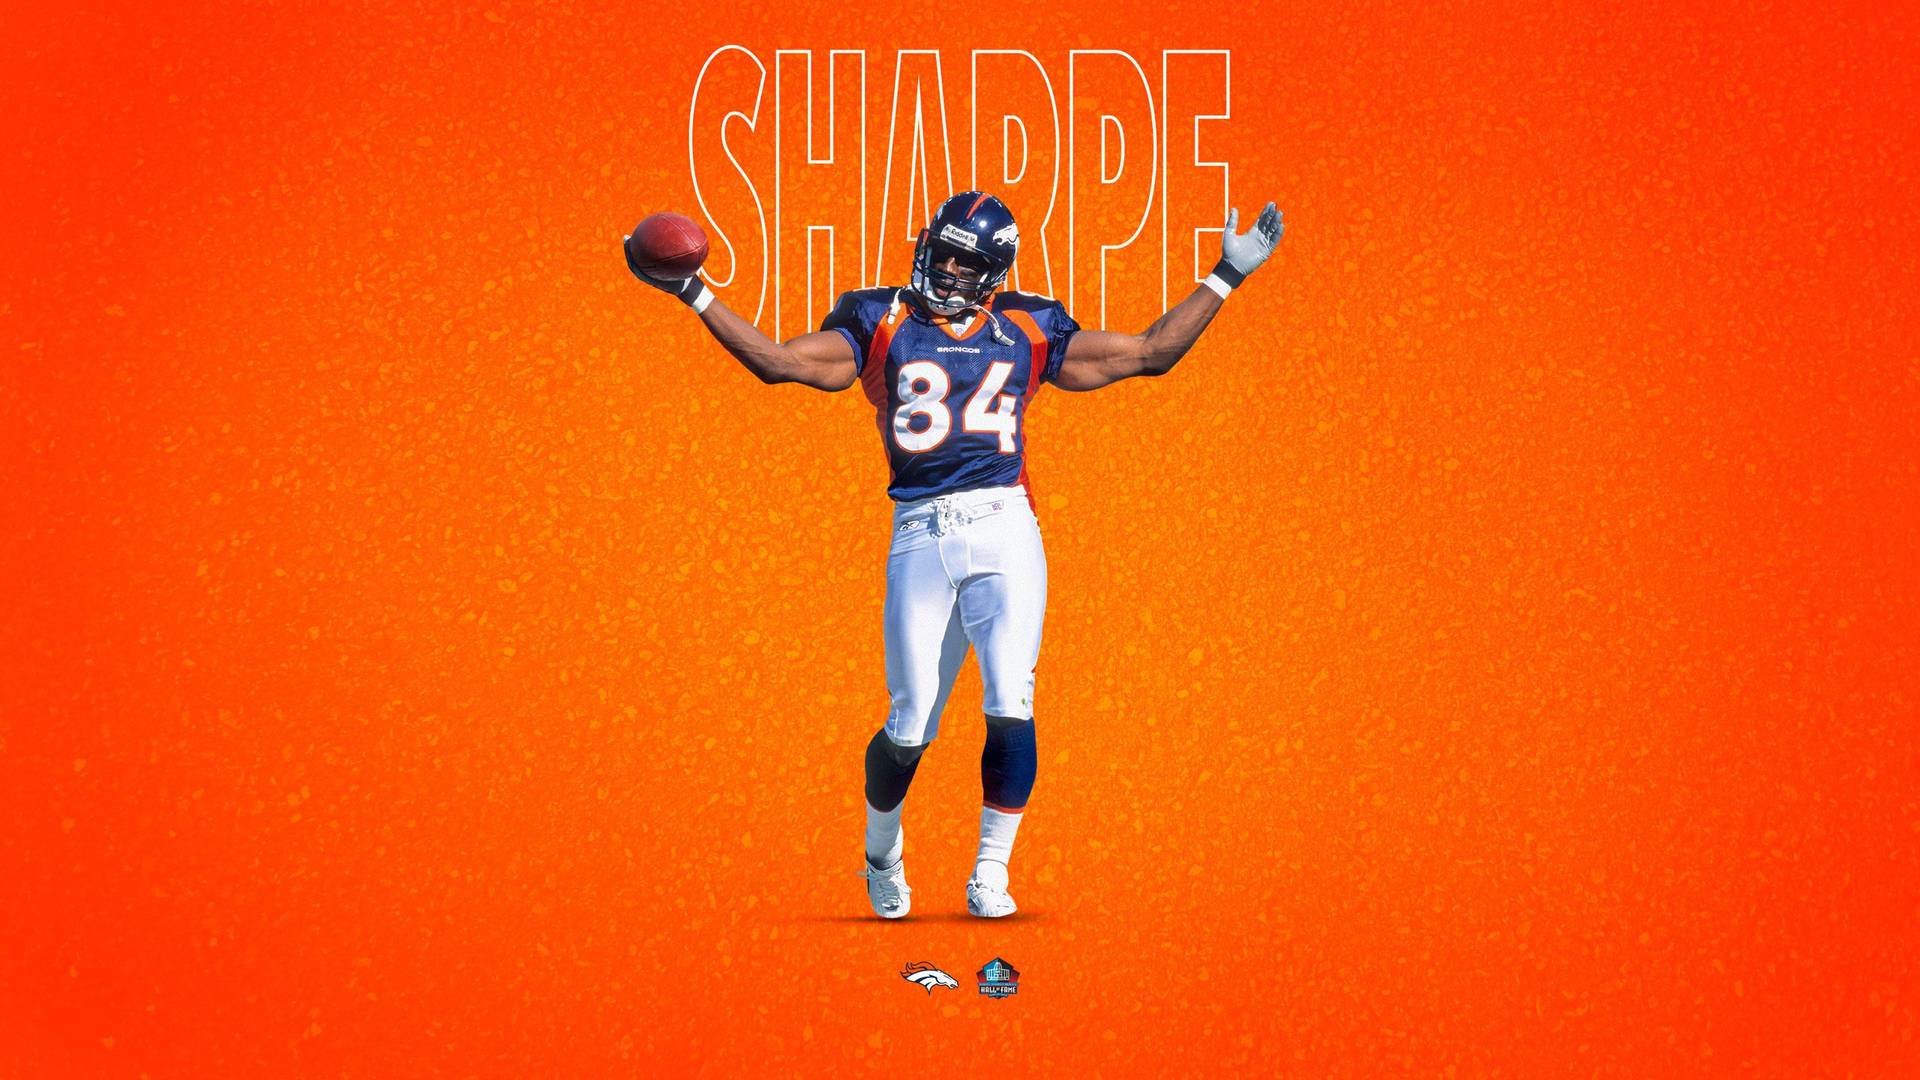 Denver Broncos 2560X1440 Wallpaper and Background Image